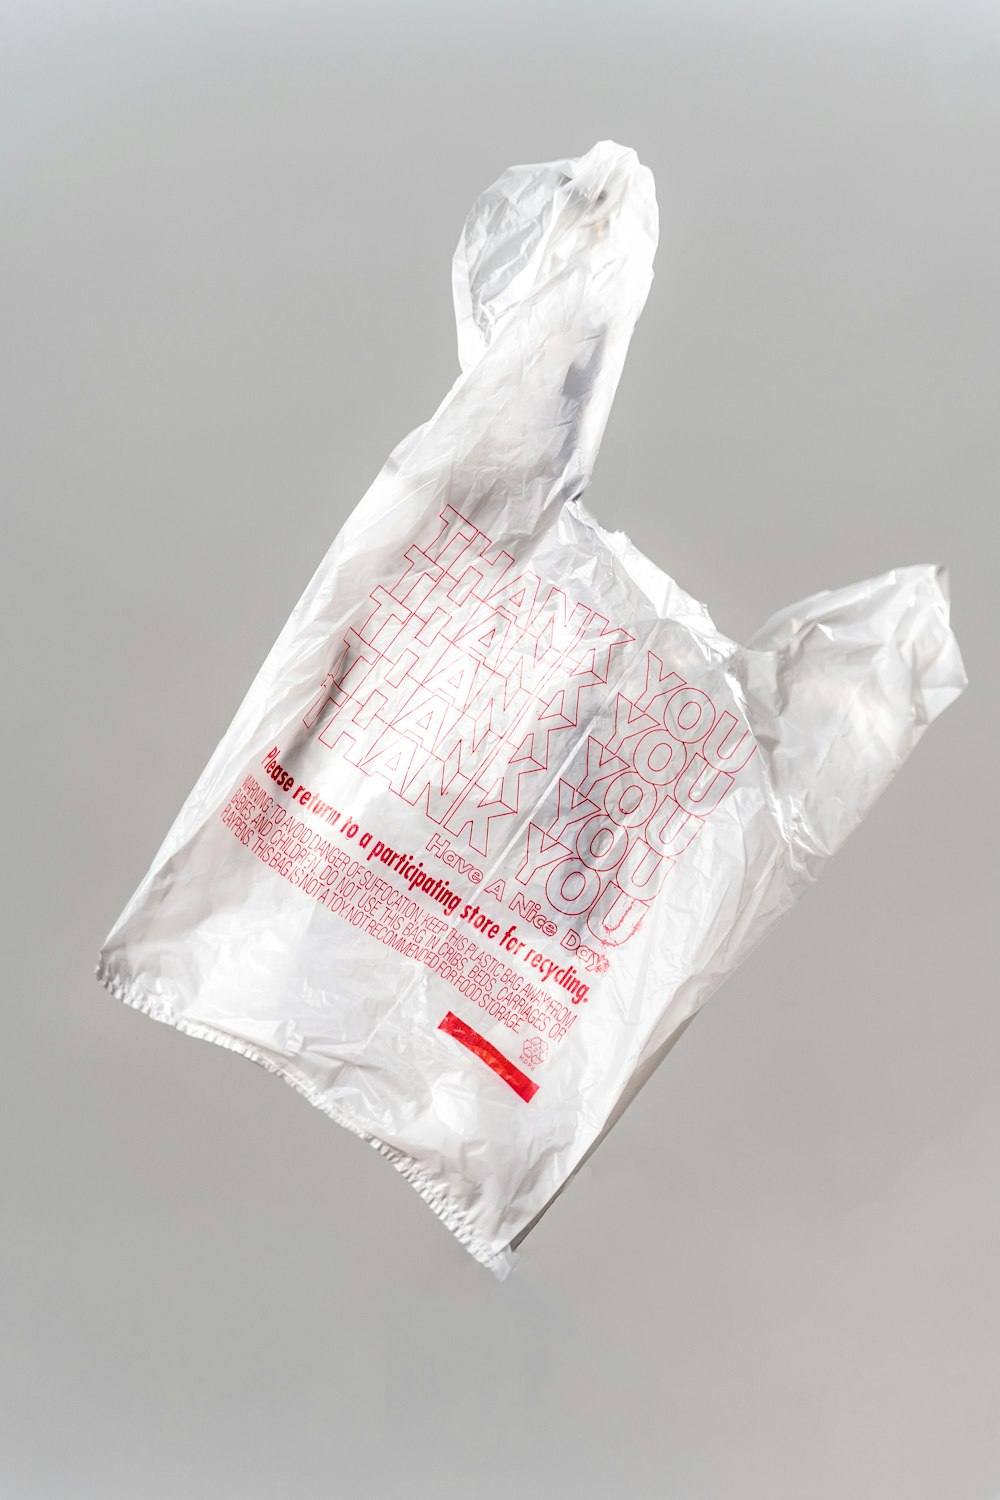 Download Plastic Bag Pictures Download Free Images On Unsplash